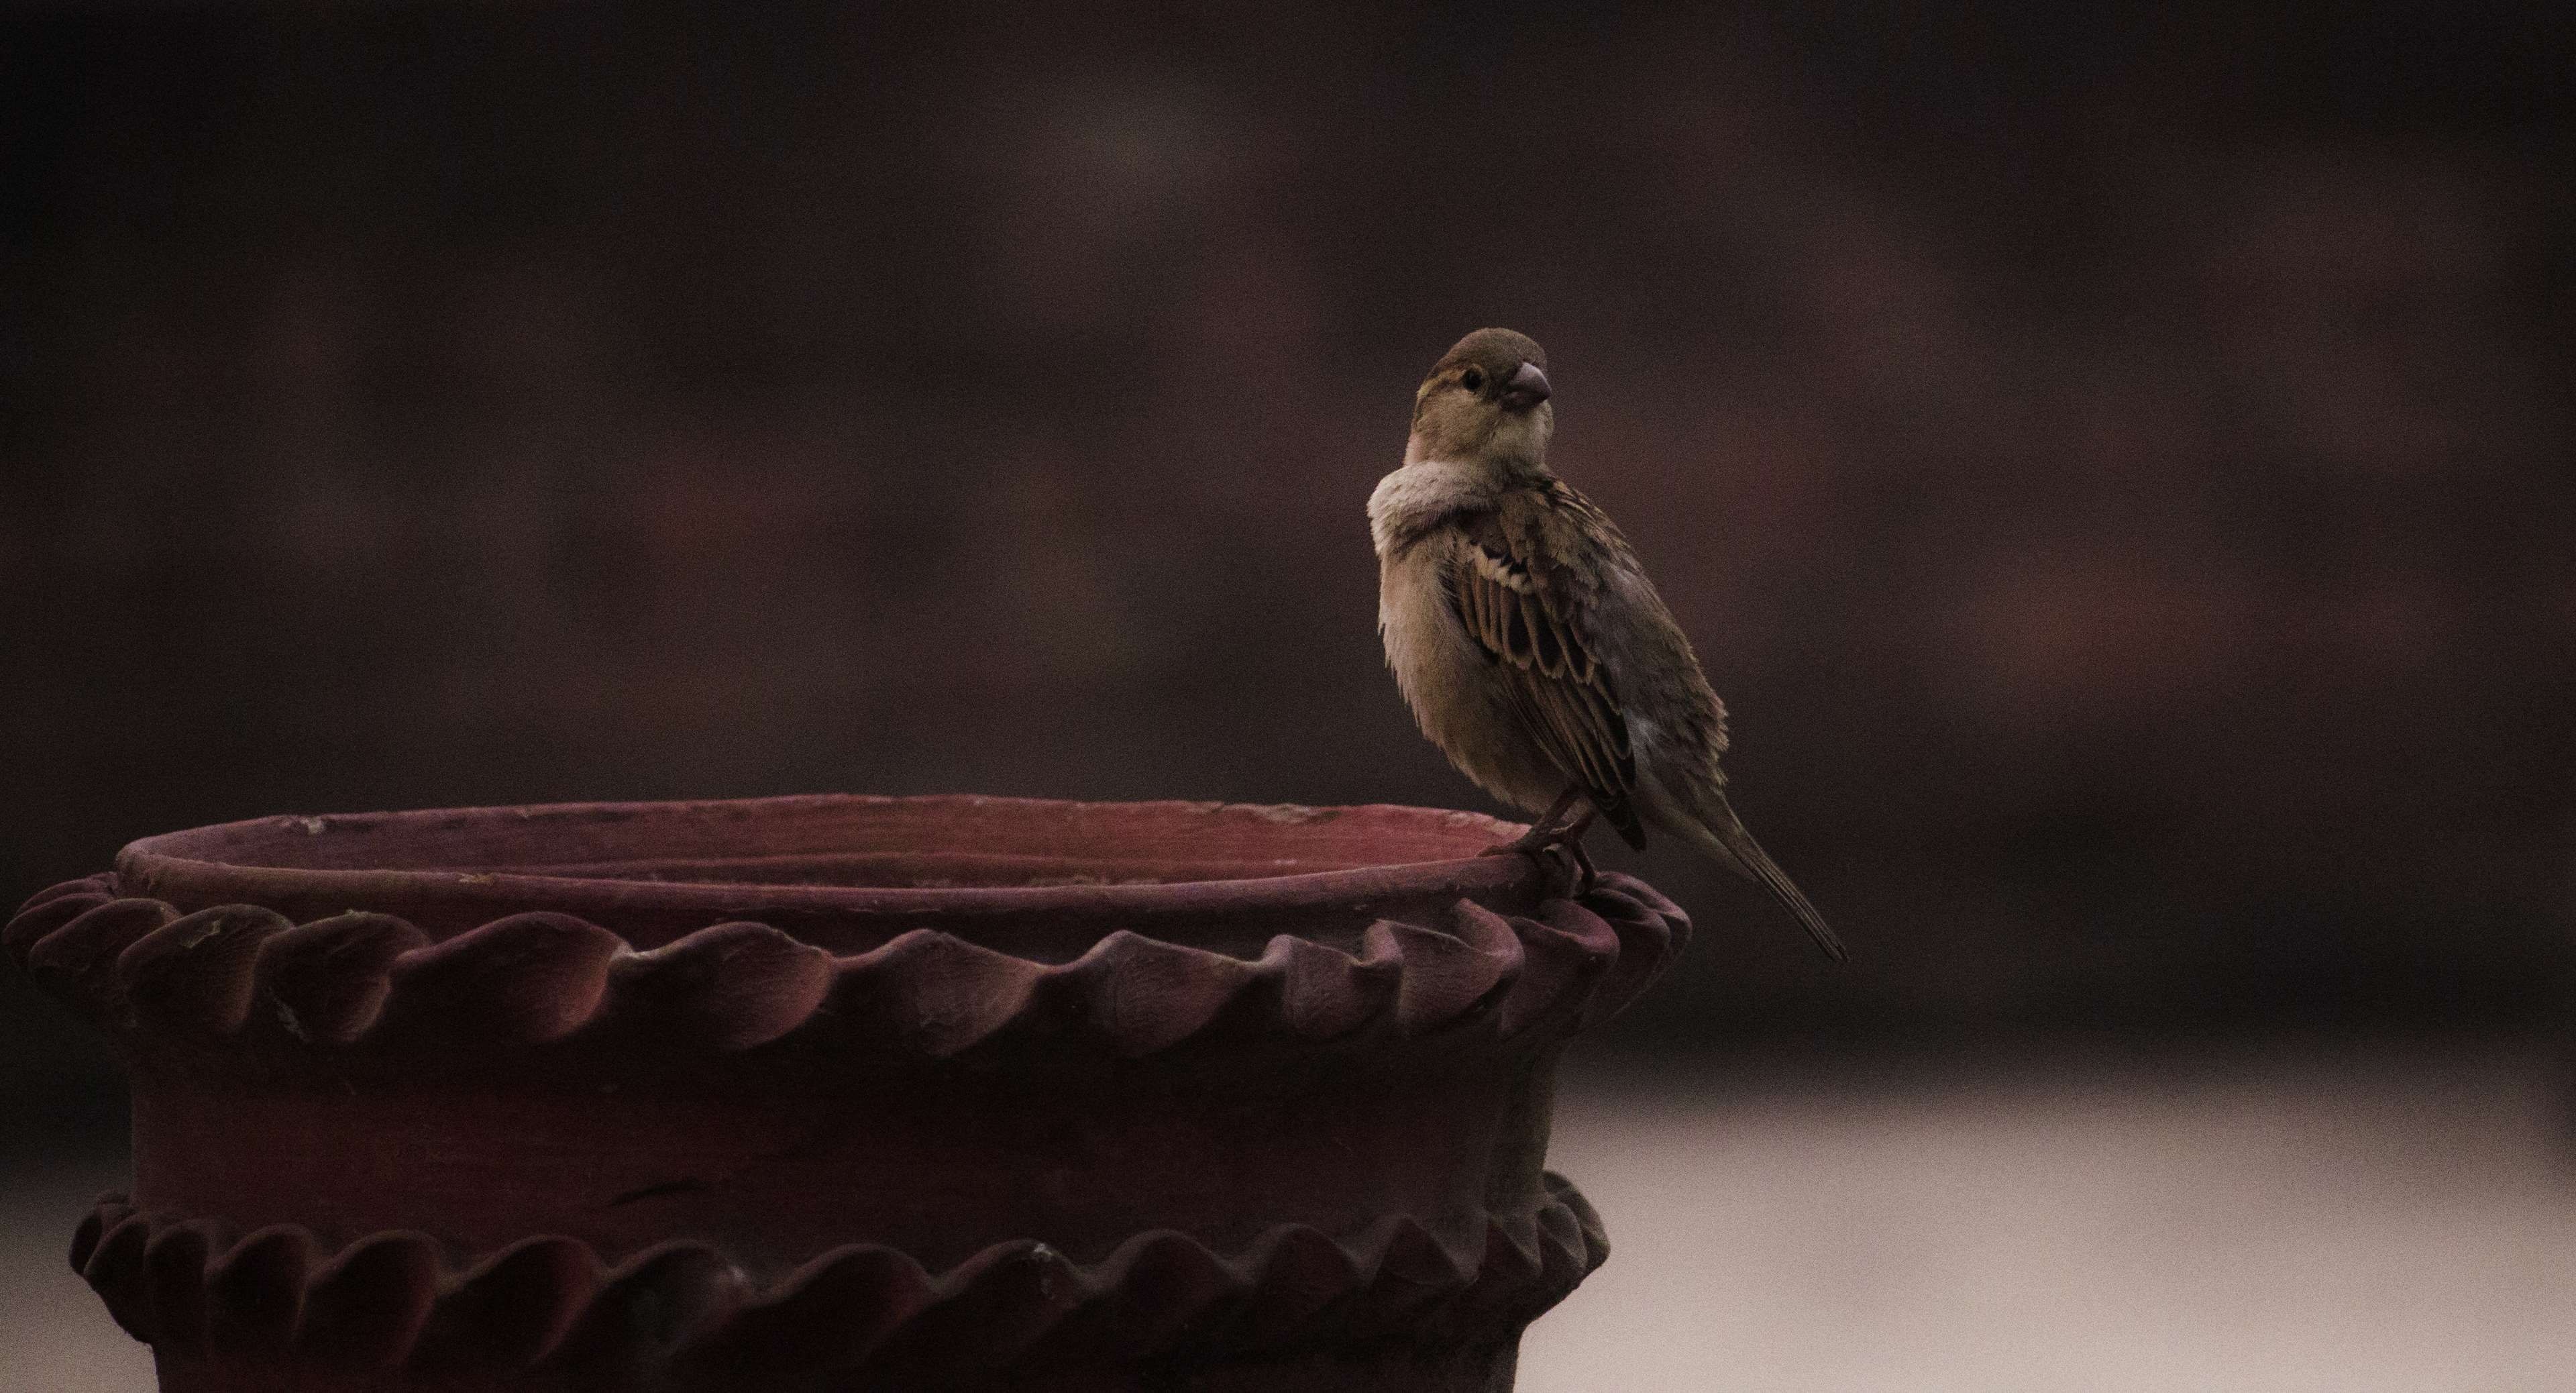 Bangladeshi bird photography, Morning bird sightings, Cool sparrow wallpaper, Birding wallpaper, 3840x2080 HD Desktop